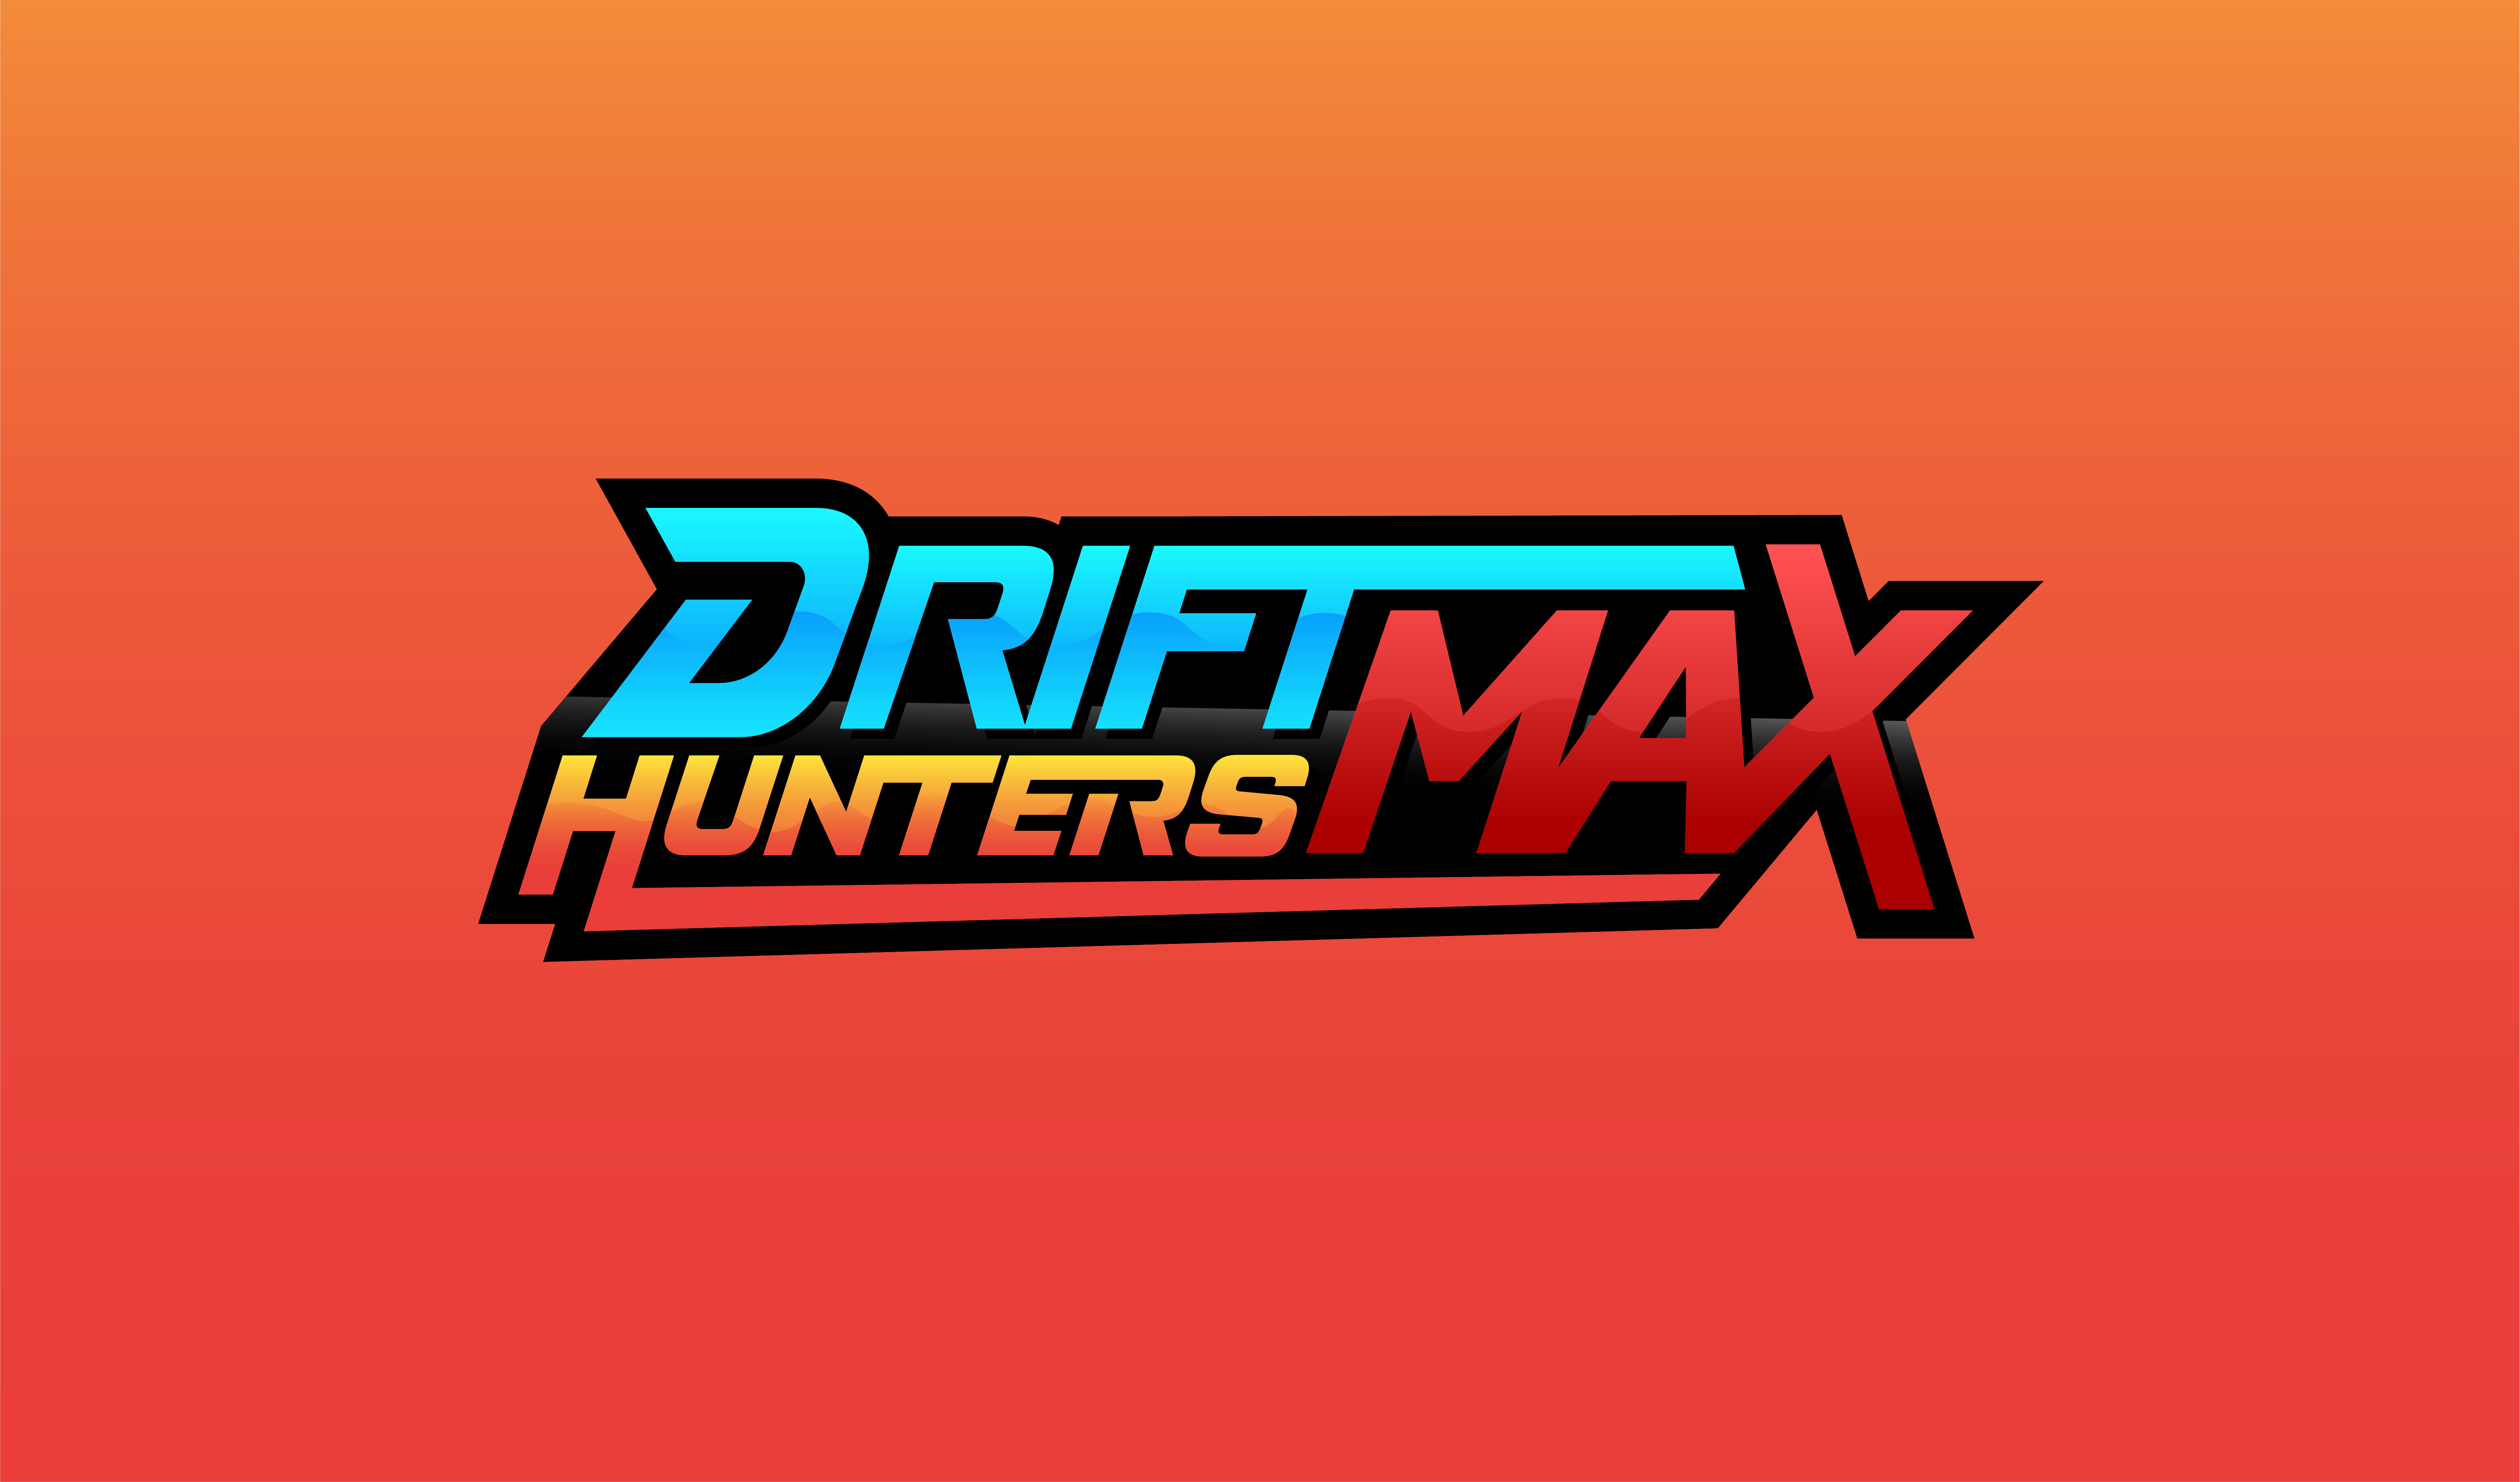 Drift Hunters - Play It Now!